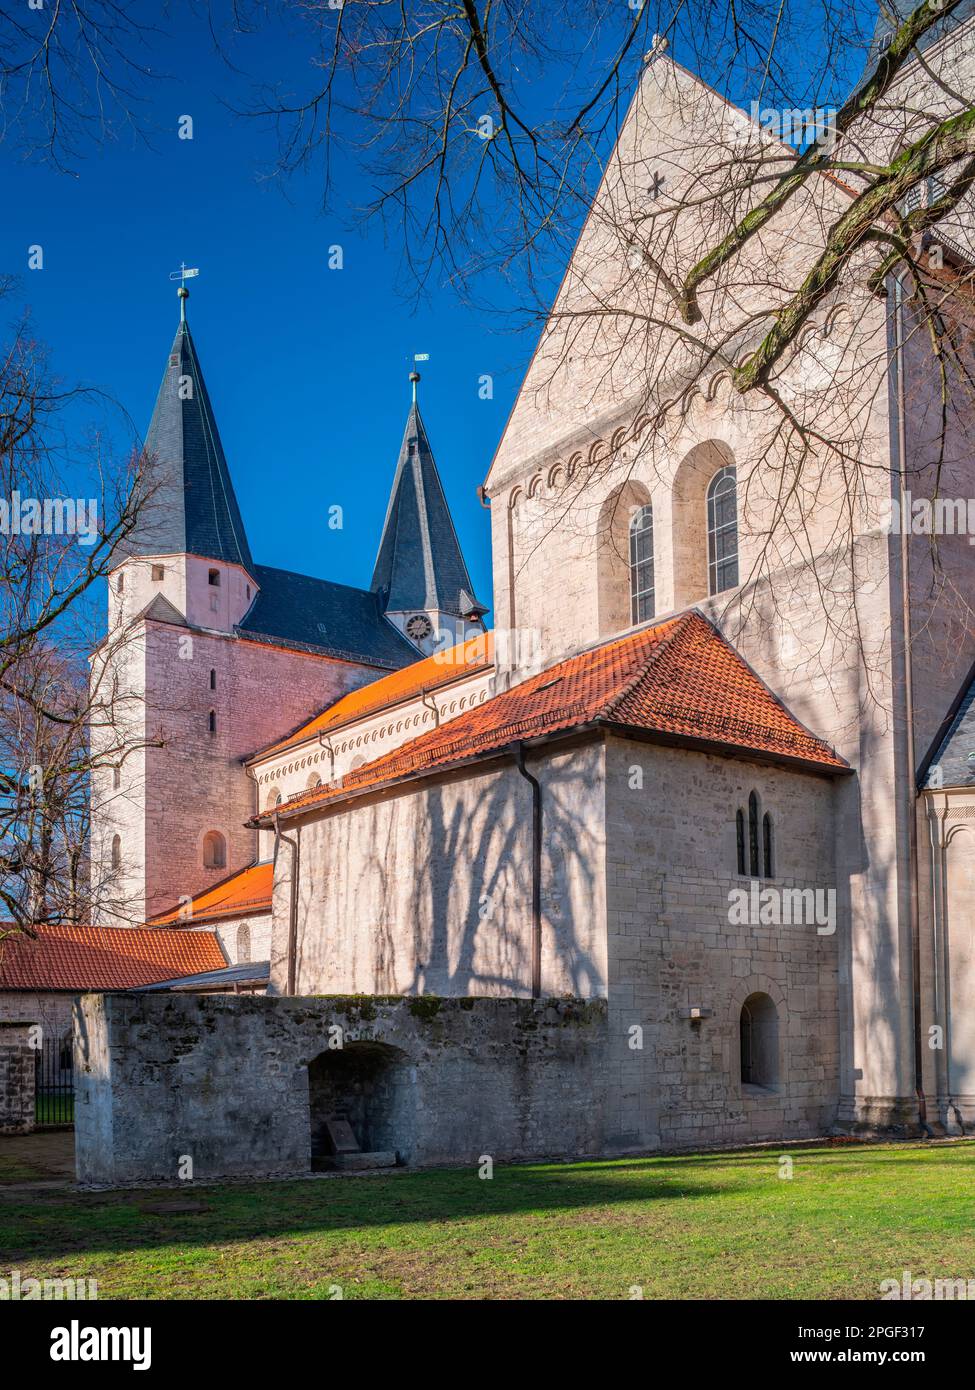 Emperor Lothar Cathedral built 1170 at Königslutter, Germany Stock Photo